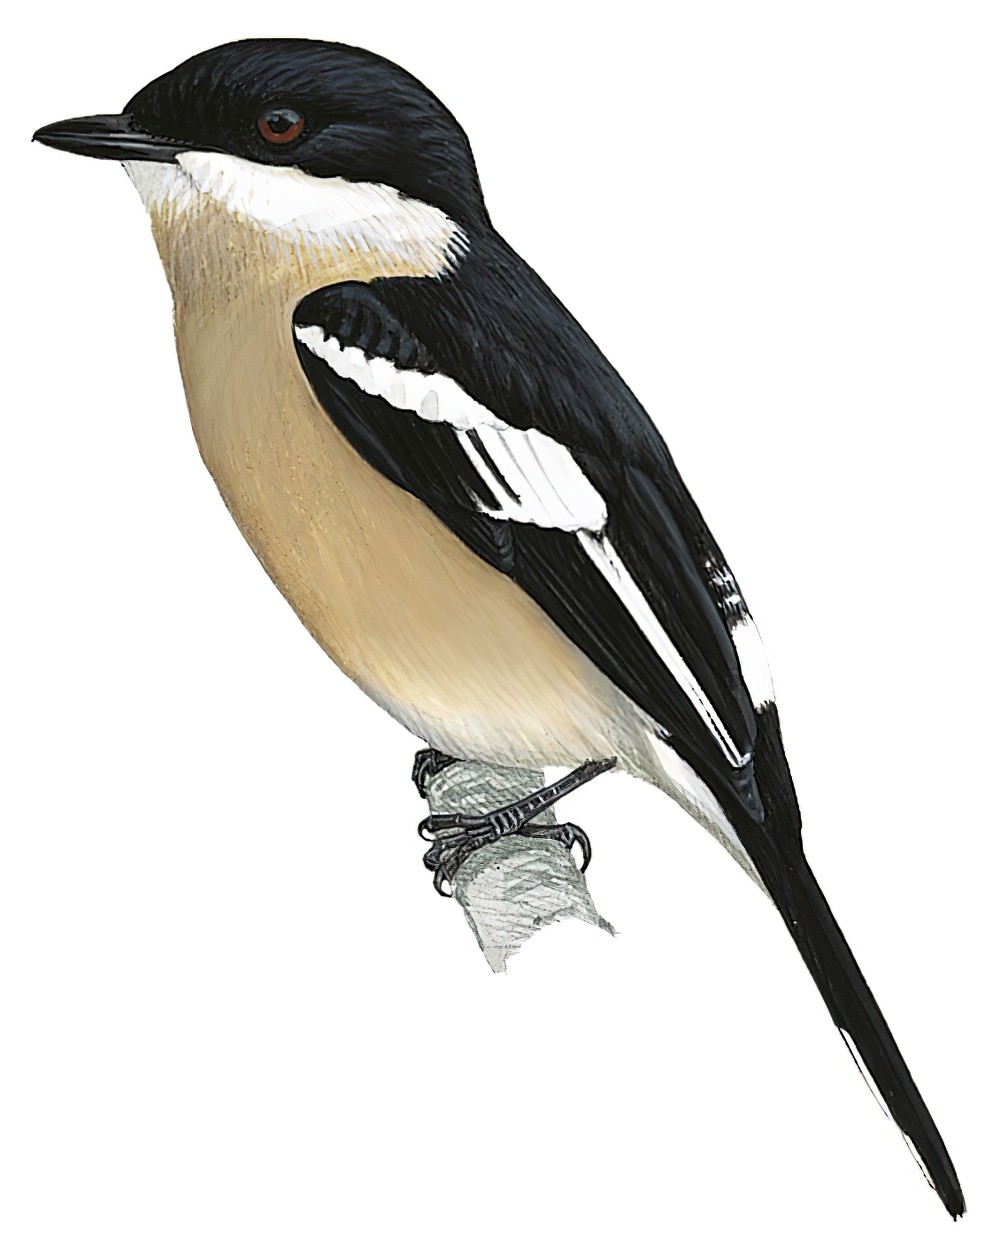 Bar-winged Flycatcher-shrike / Hemipus picatus